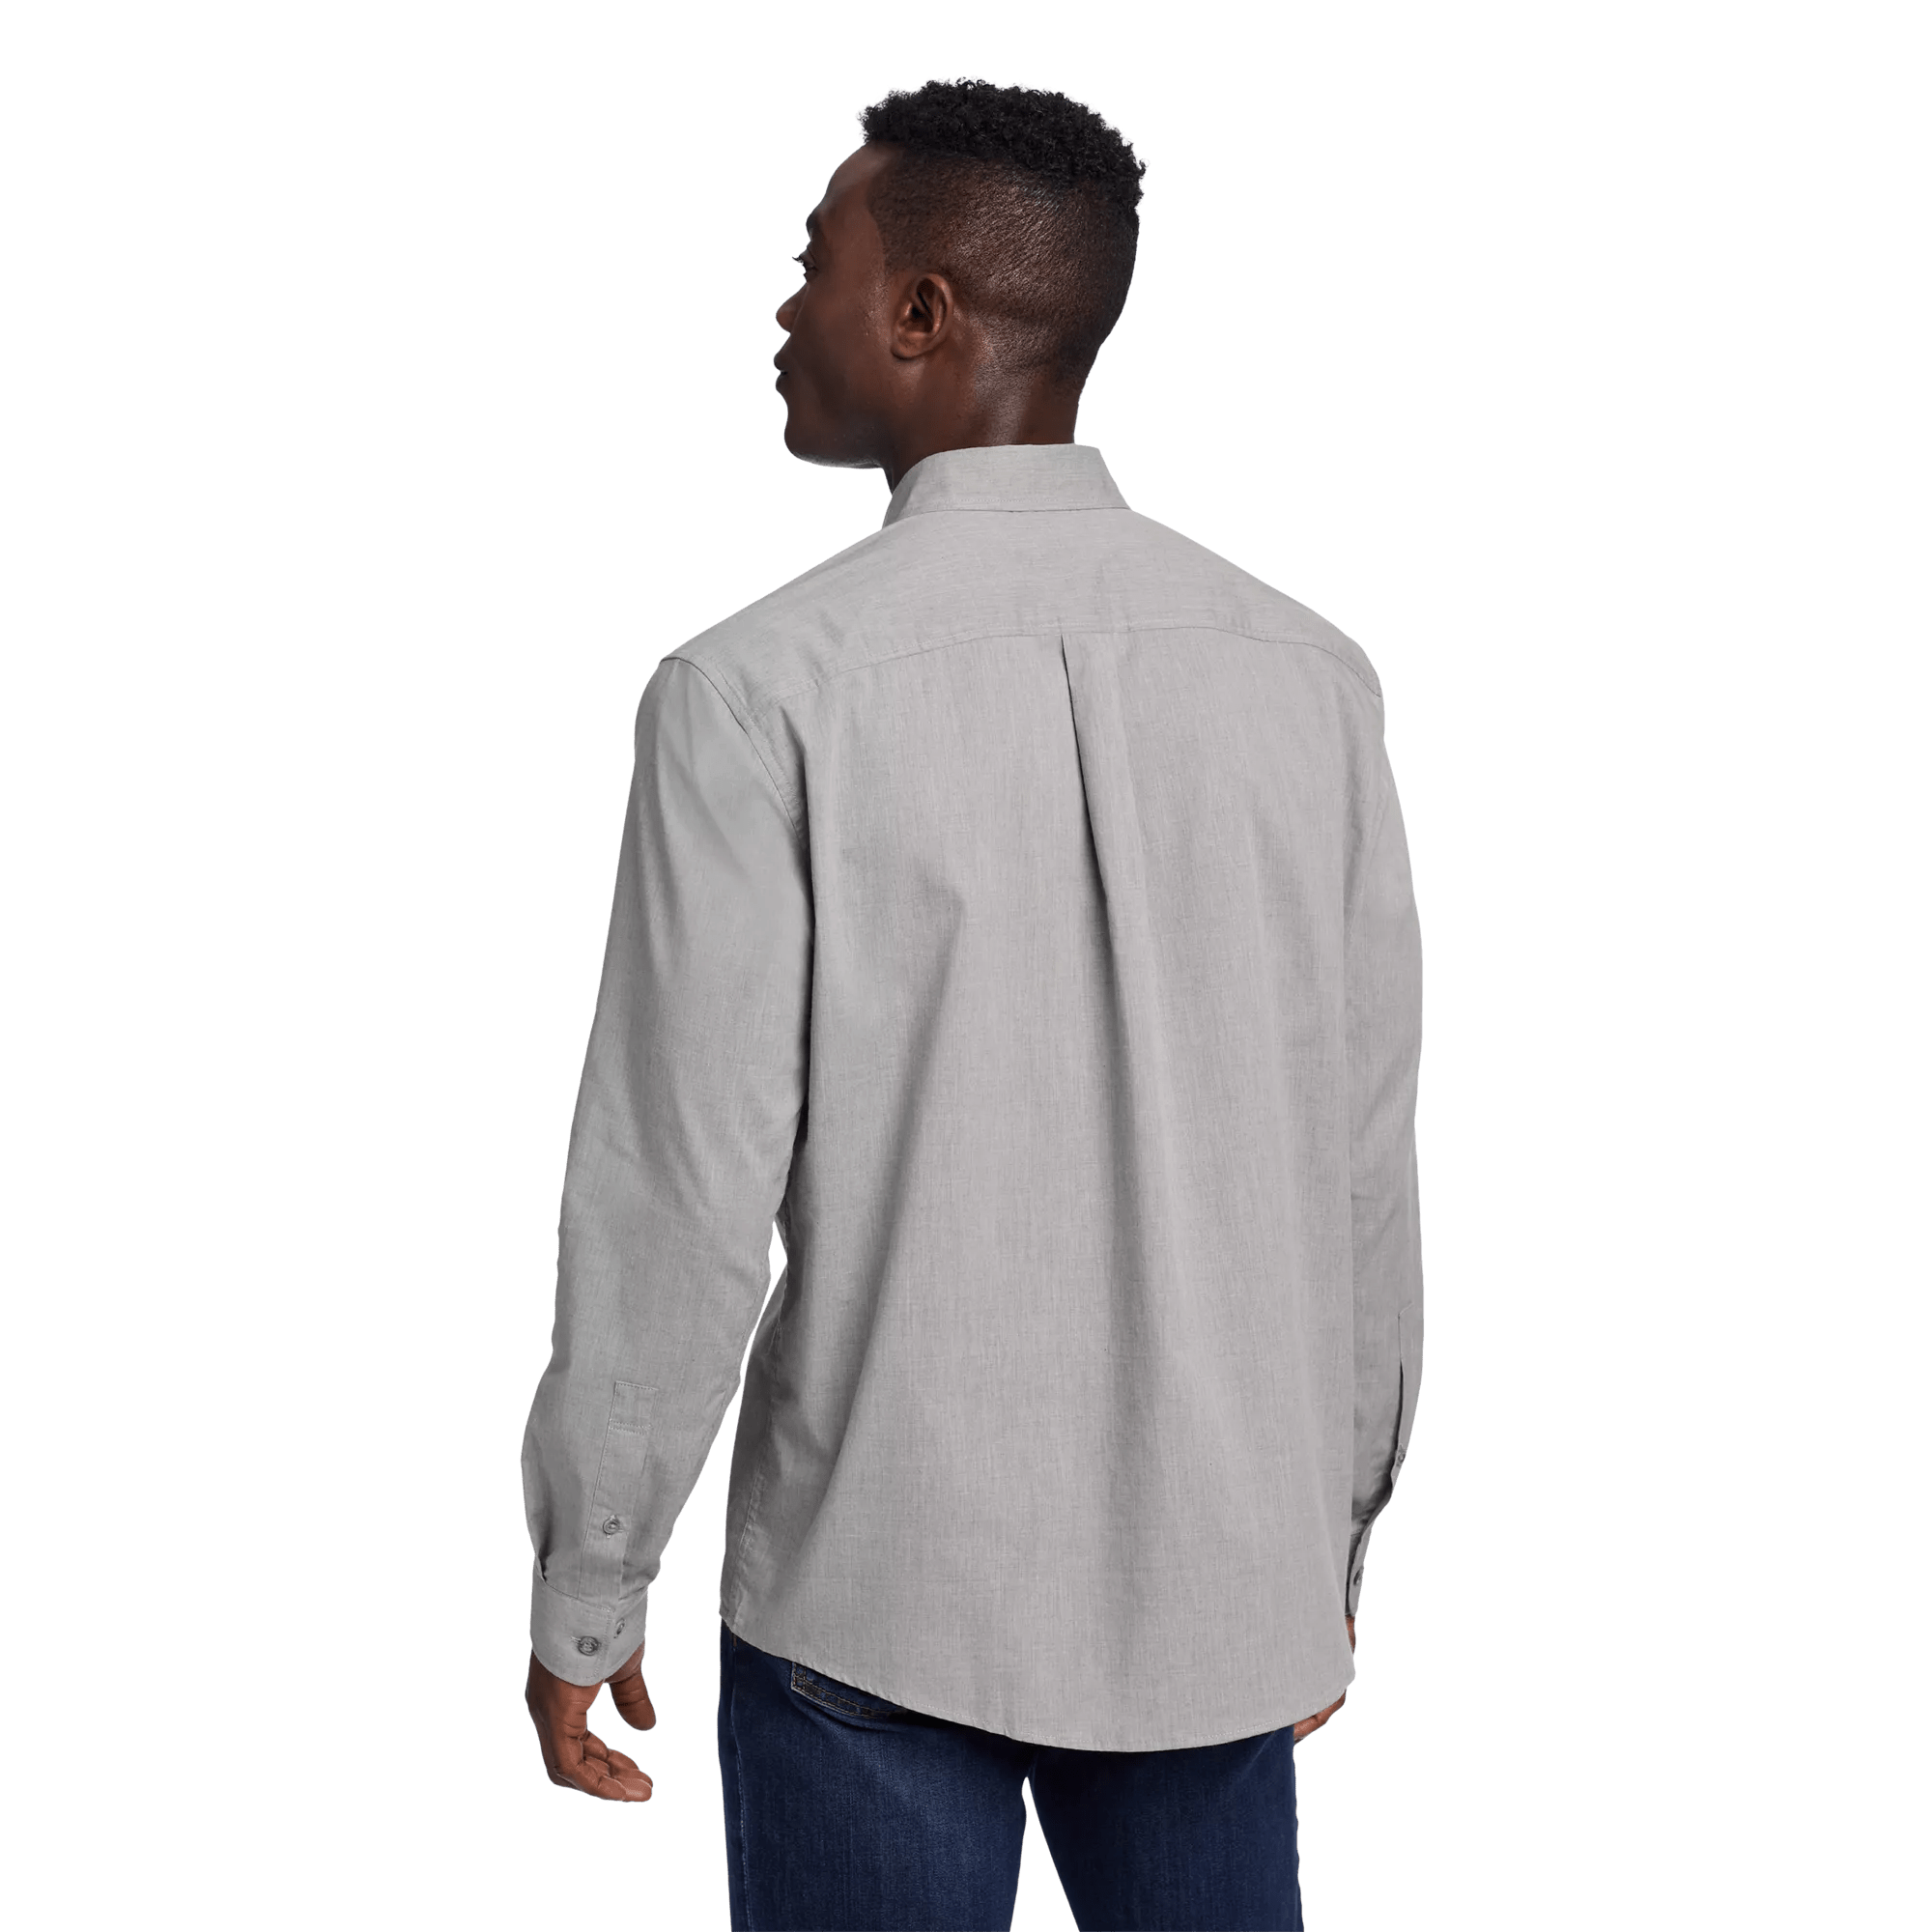 Voyager Flex Long-Sleeve Shirt